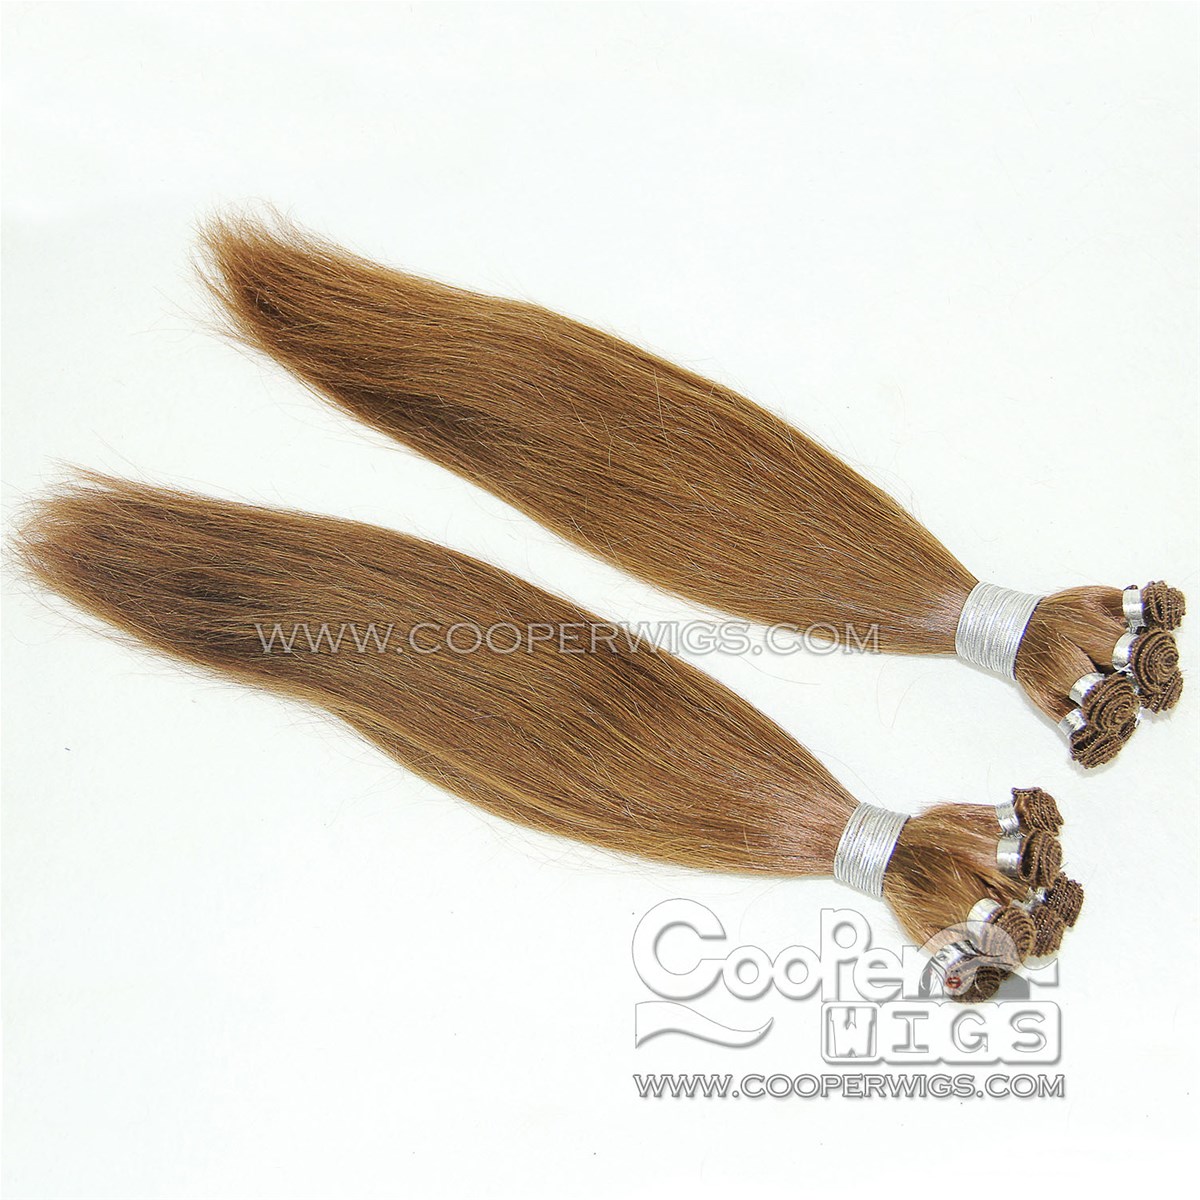 Cooper wigs Brazilian Hair Weave Bundles 100 Human Hair Straight 6 Color Hair Extension